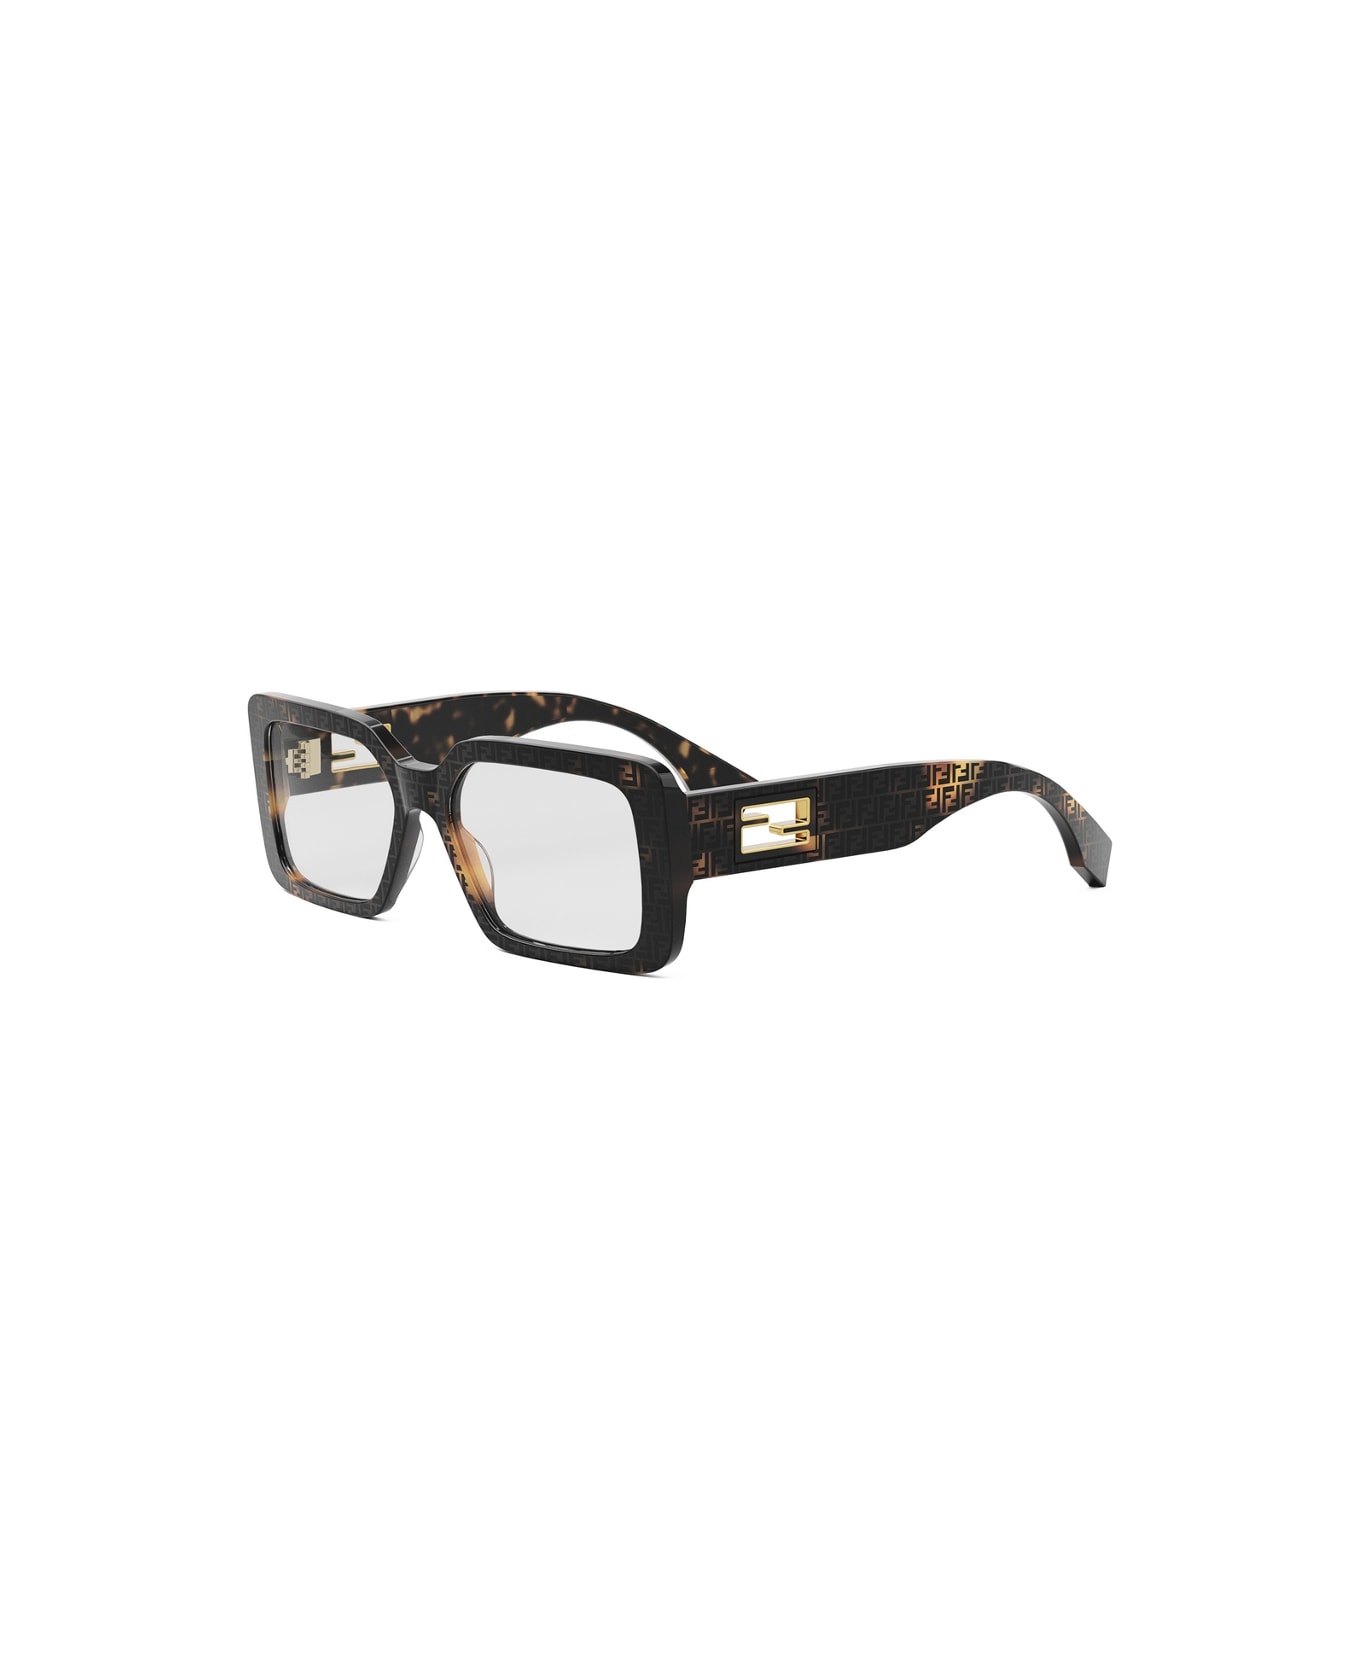 Fendi Eyewear FE50072i 055 Glasses